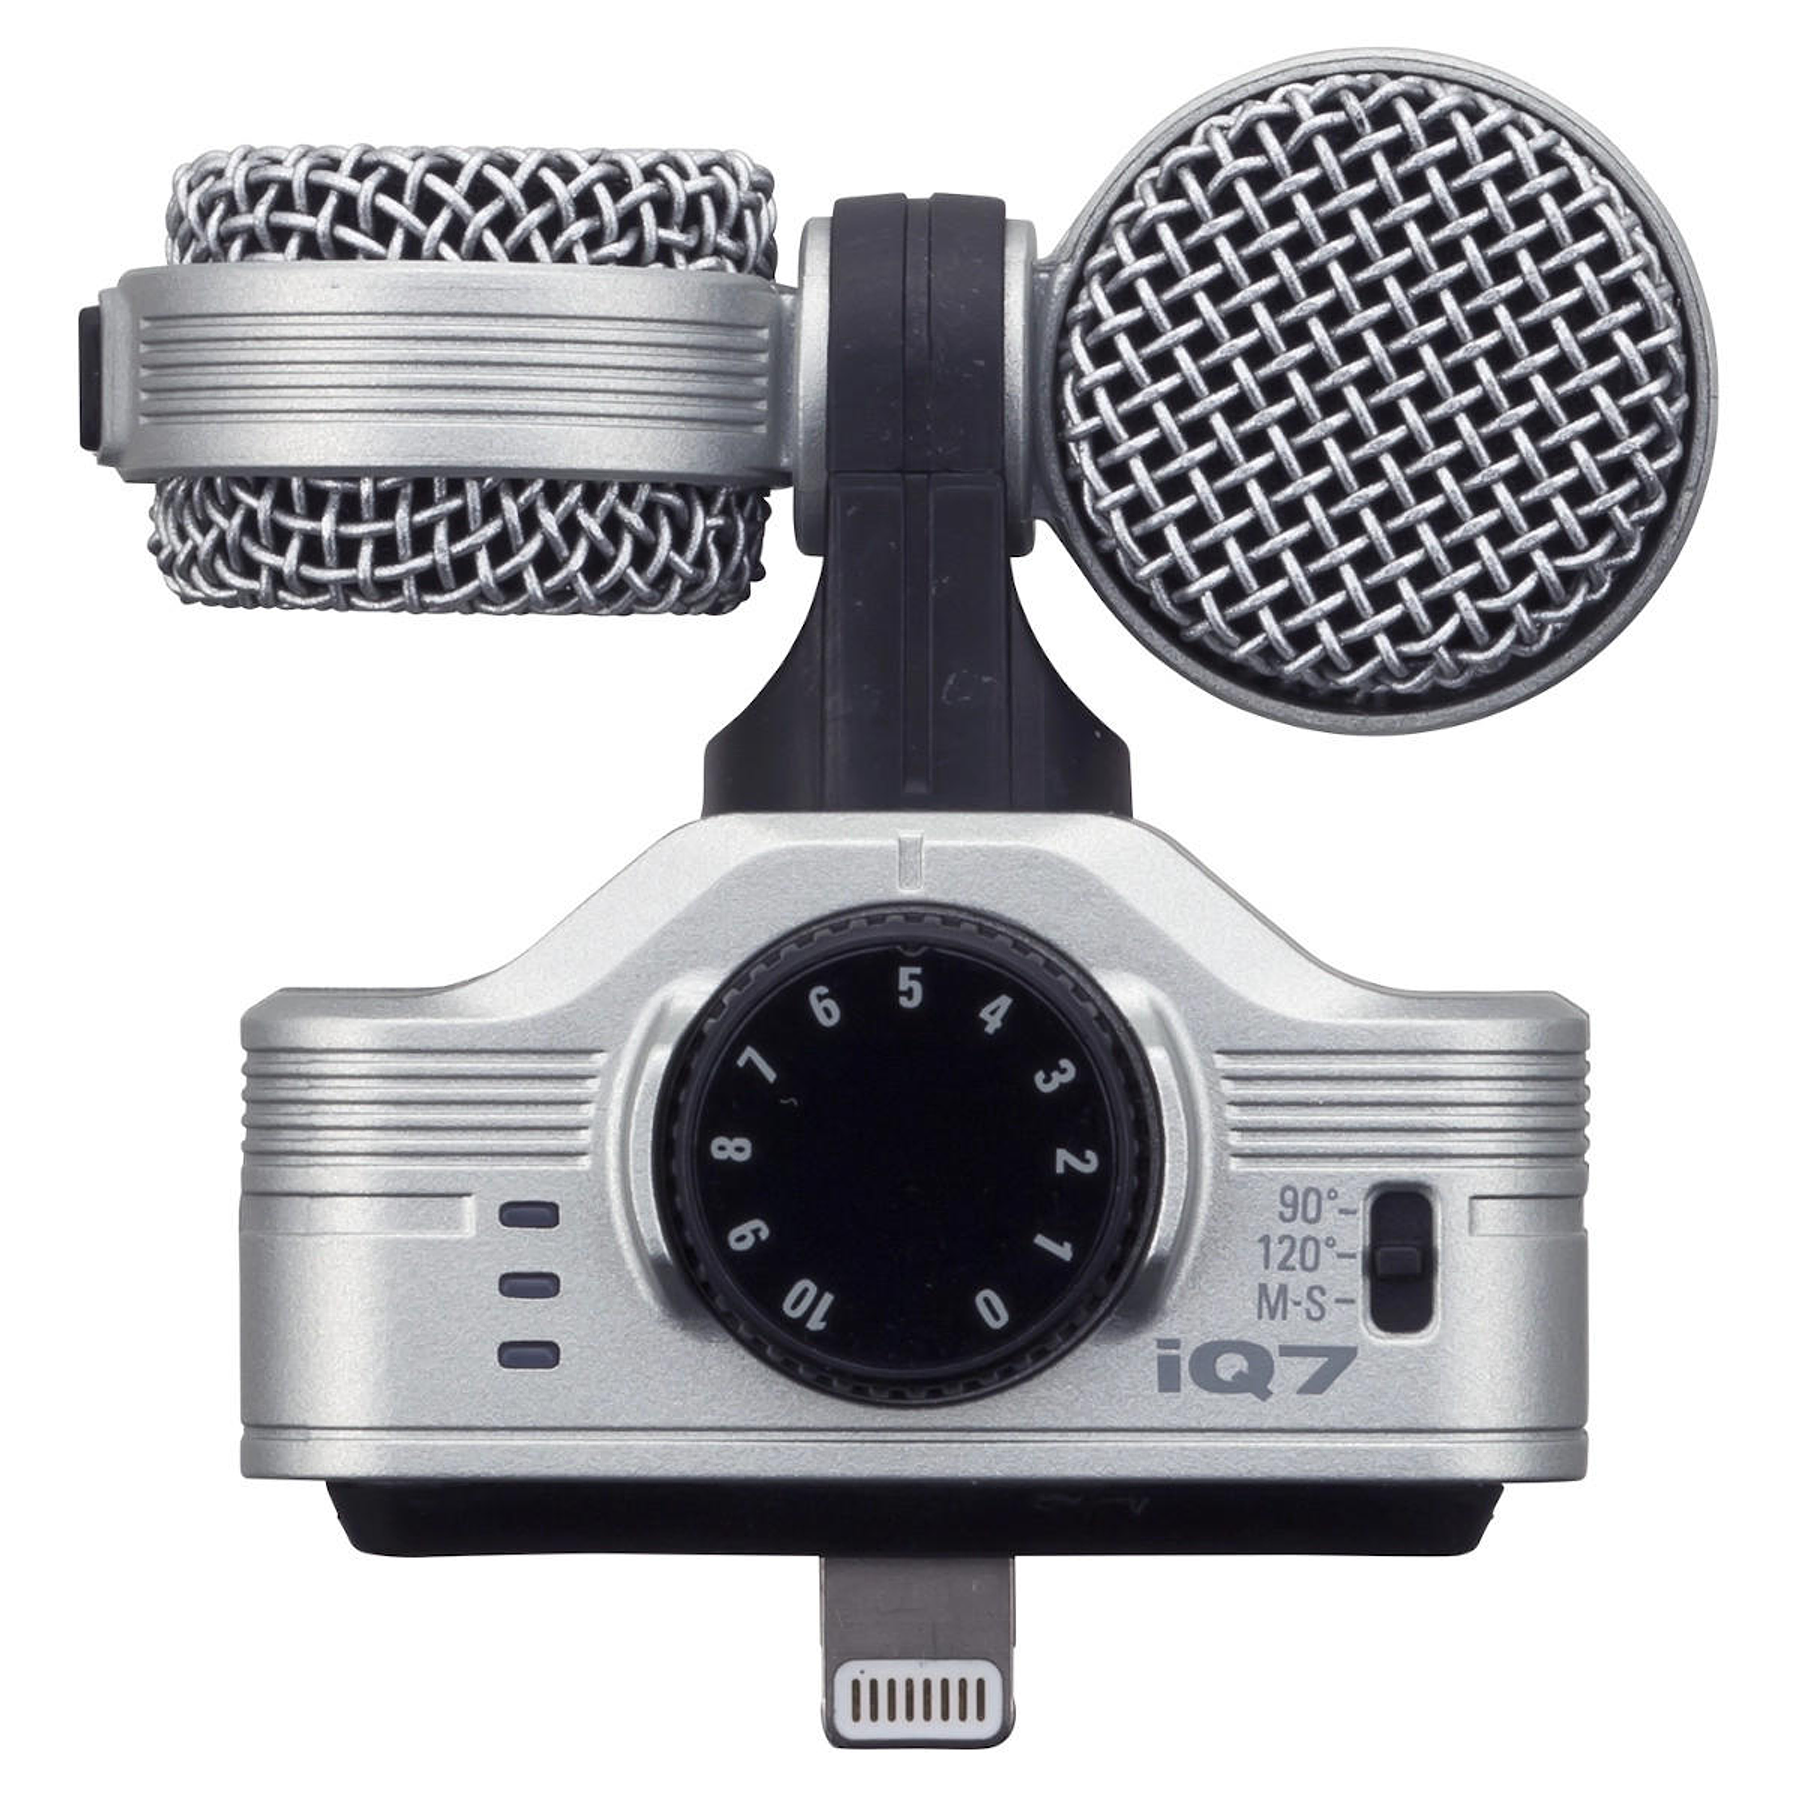 Microfono Estereo Lightning Zoom iQ7